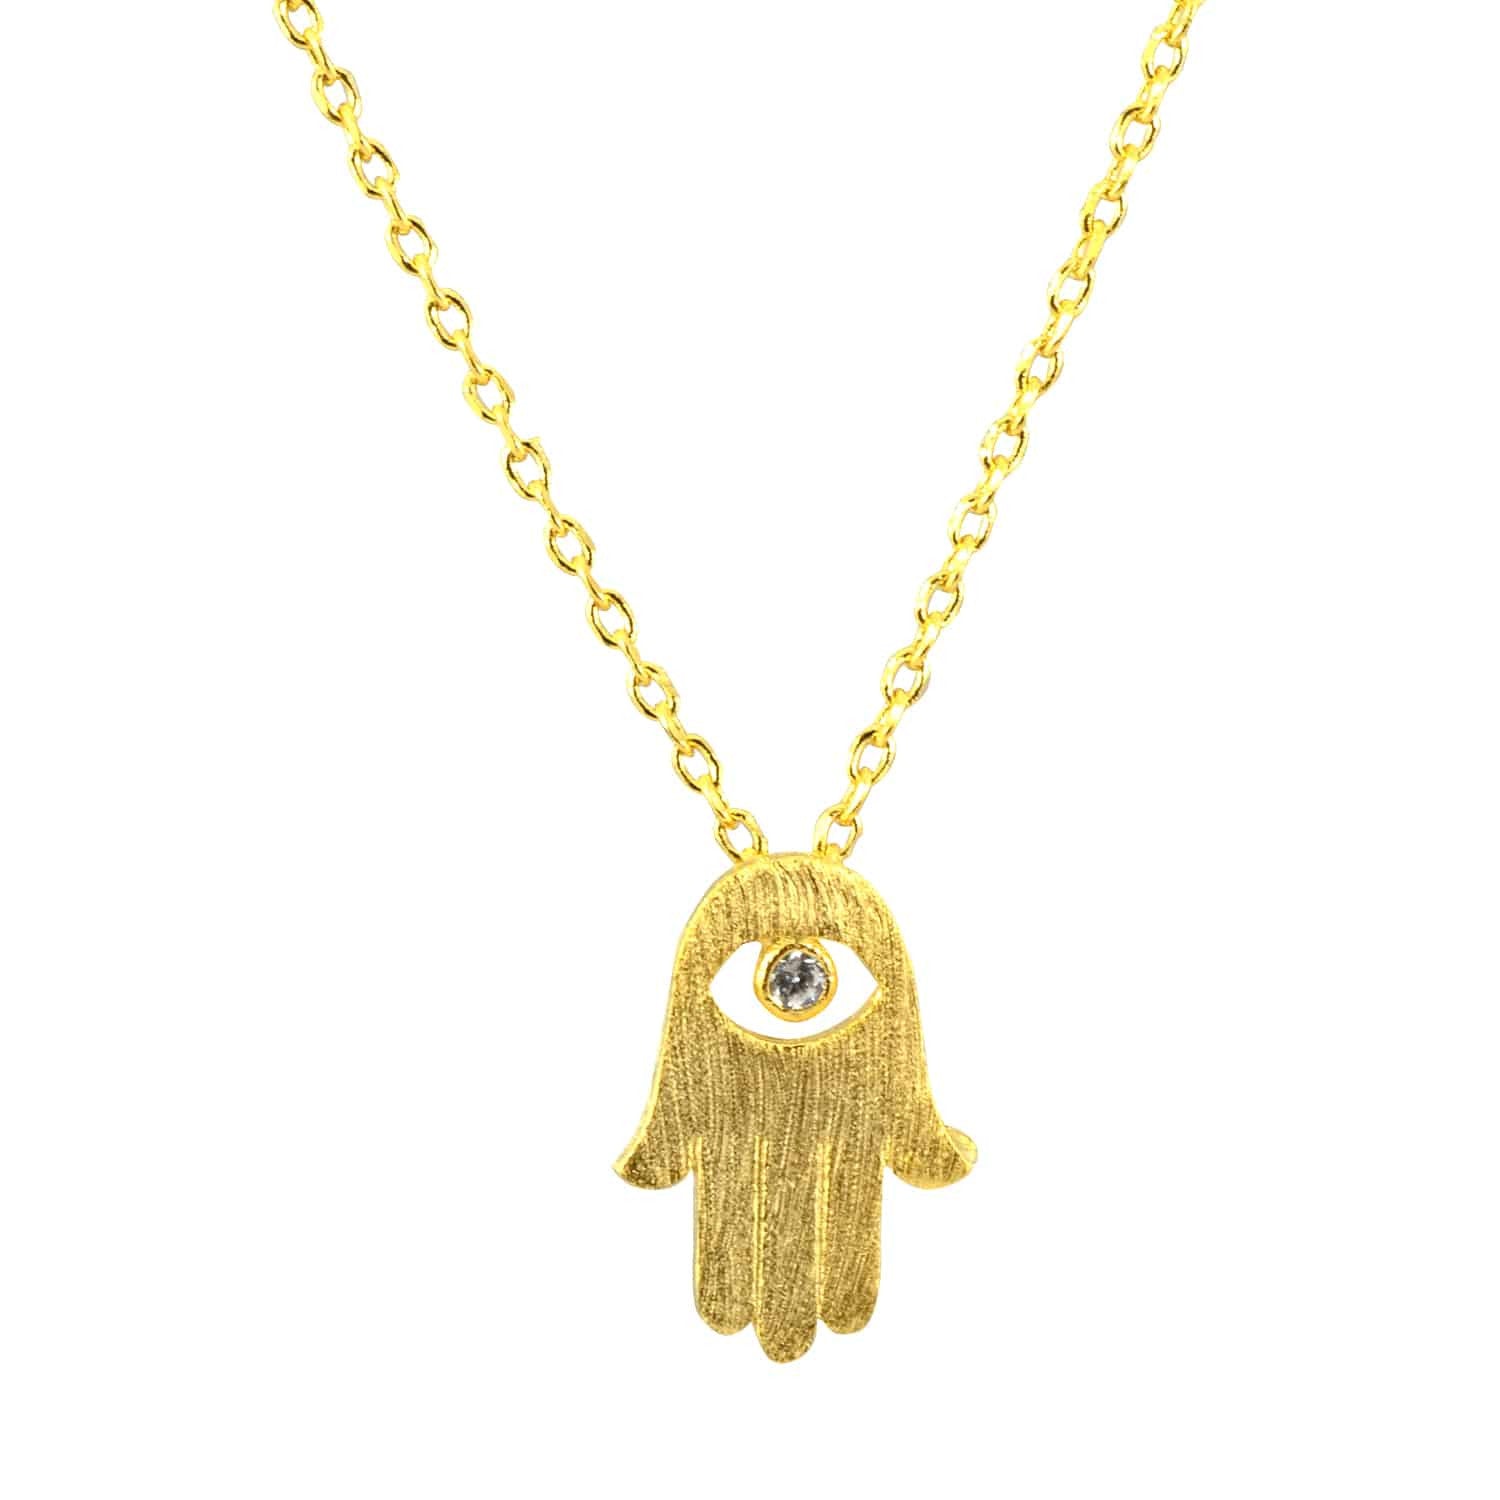 Enreverie Hamsa Hand Necklace, Gold Plated Pendant